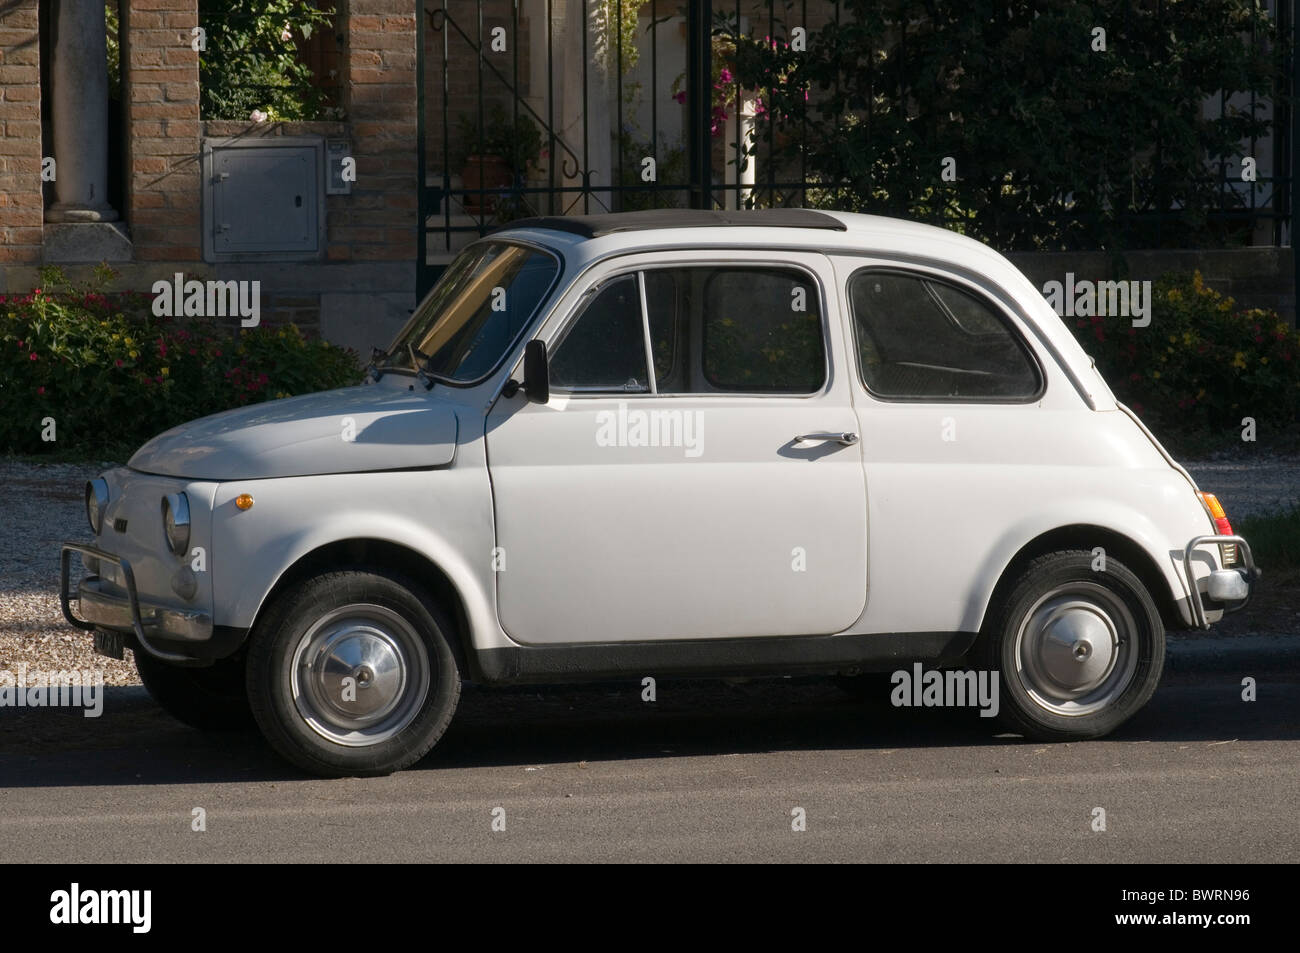 fiat 500 small city town car cars tiny micro cool classic italian italy  Stock Photo - Alamy